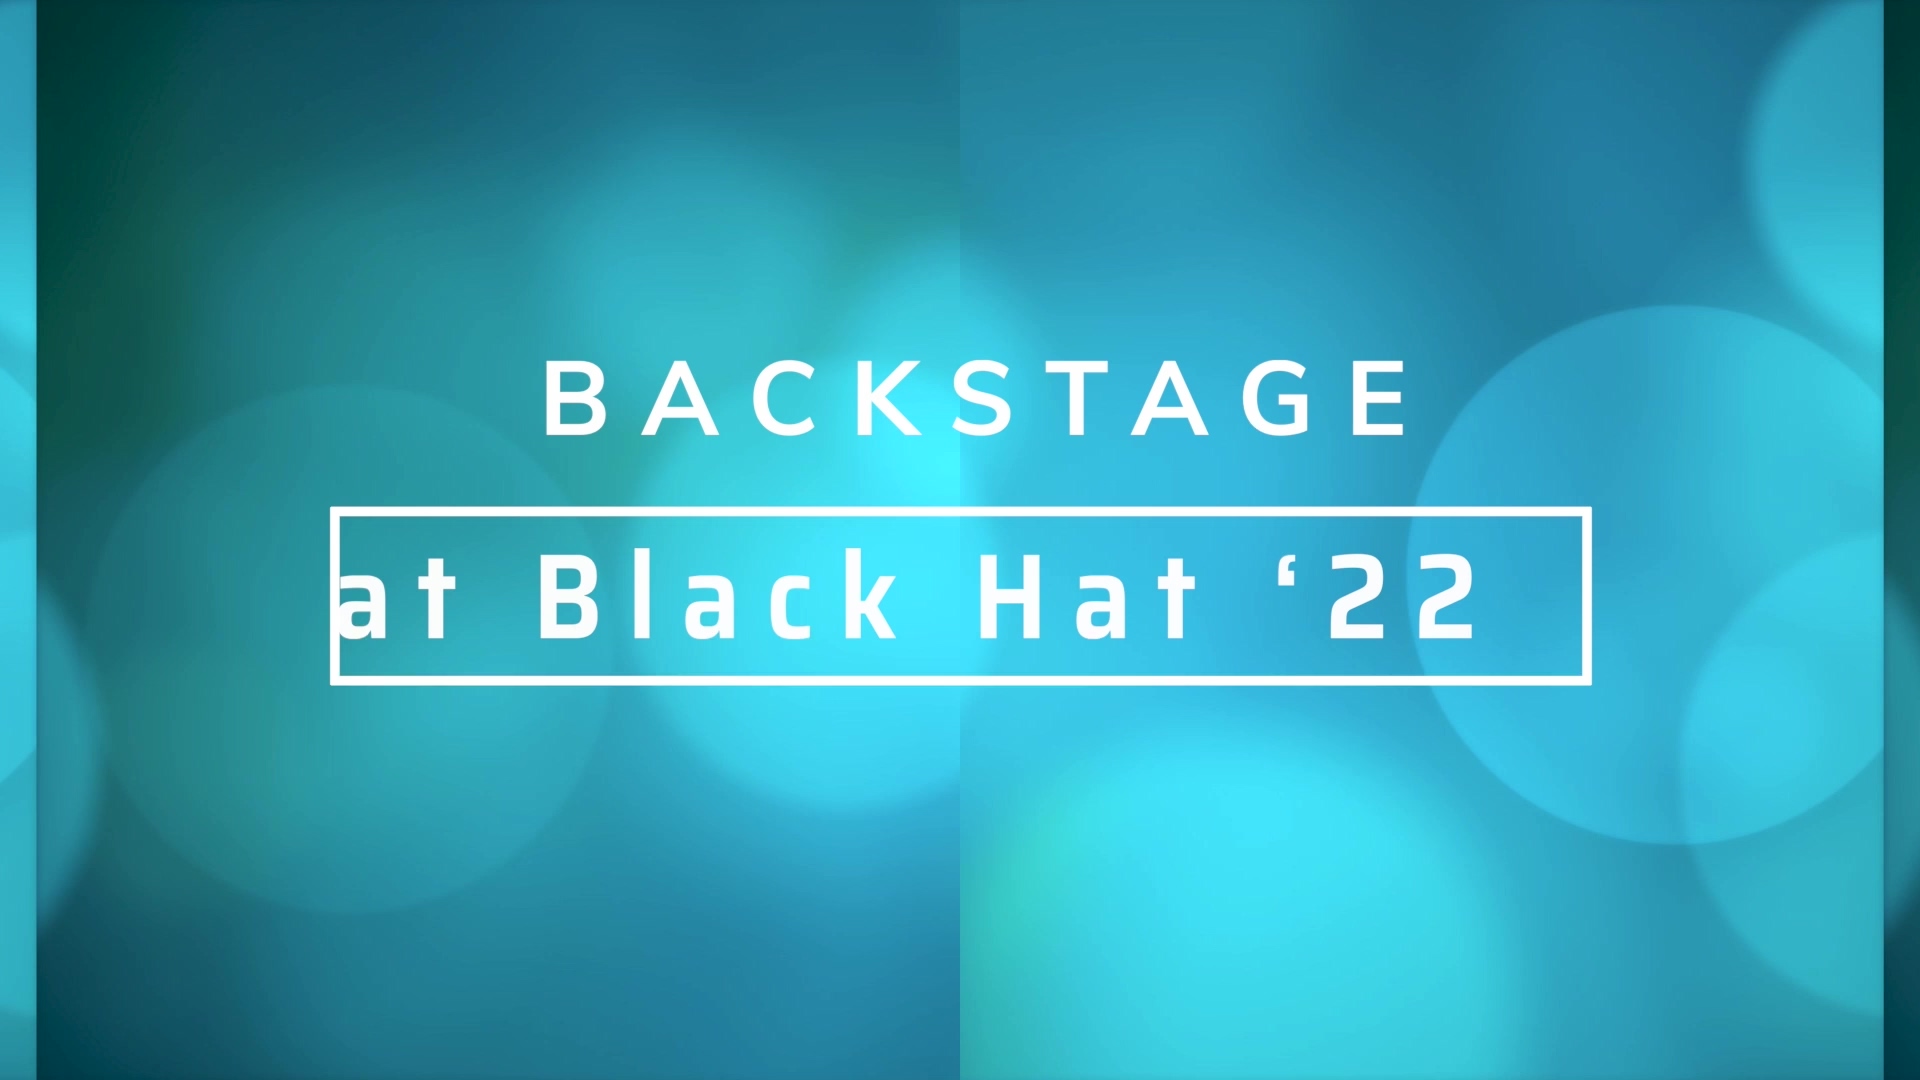 Legit Security - Backstage at Black Hat 2022-thumb-1